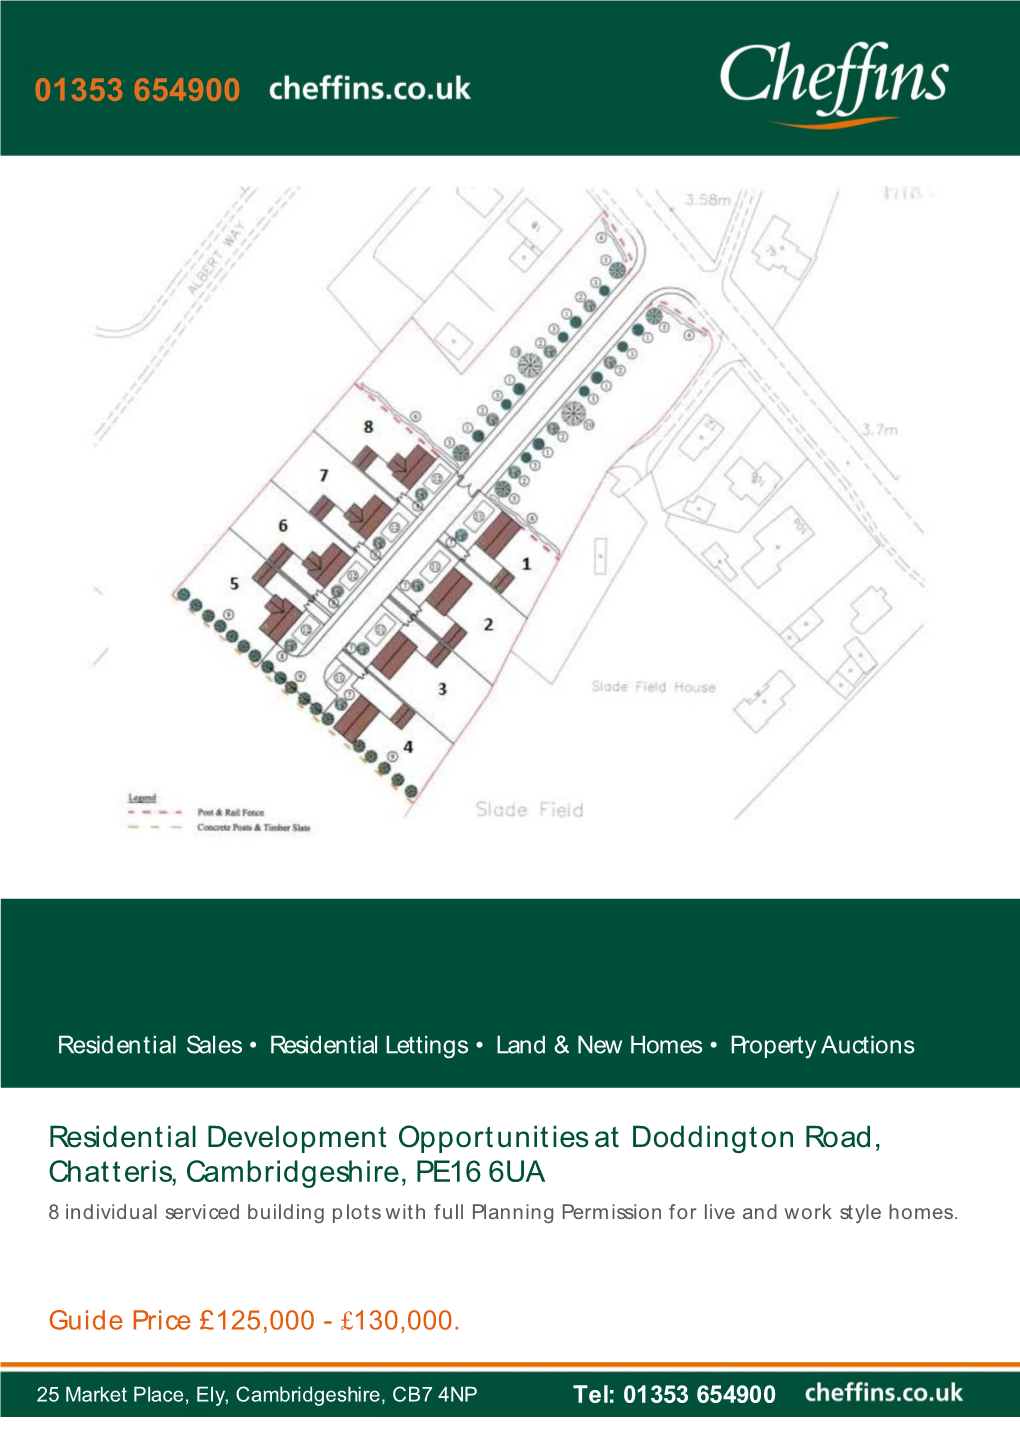 Residential Development Opportunities at Doddington Road, Chatteris, Cambridgeshire, PE16 6UA